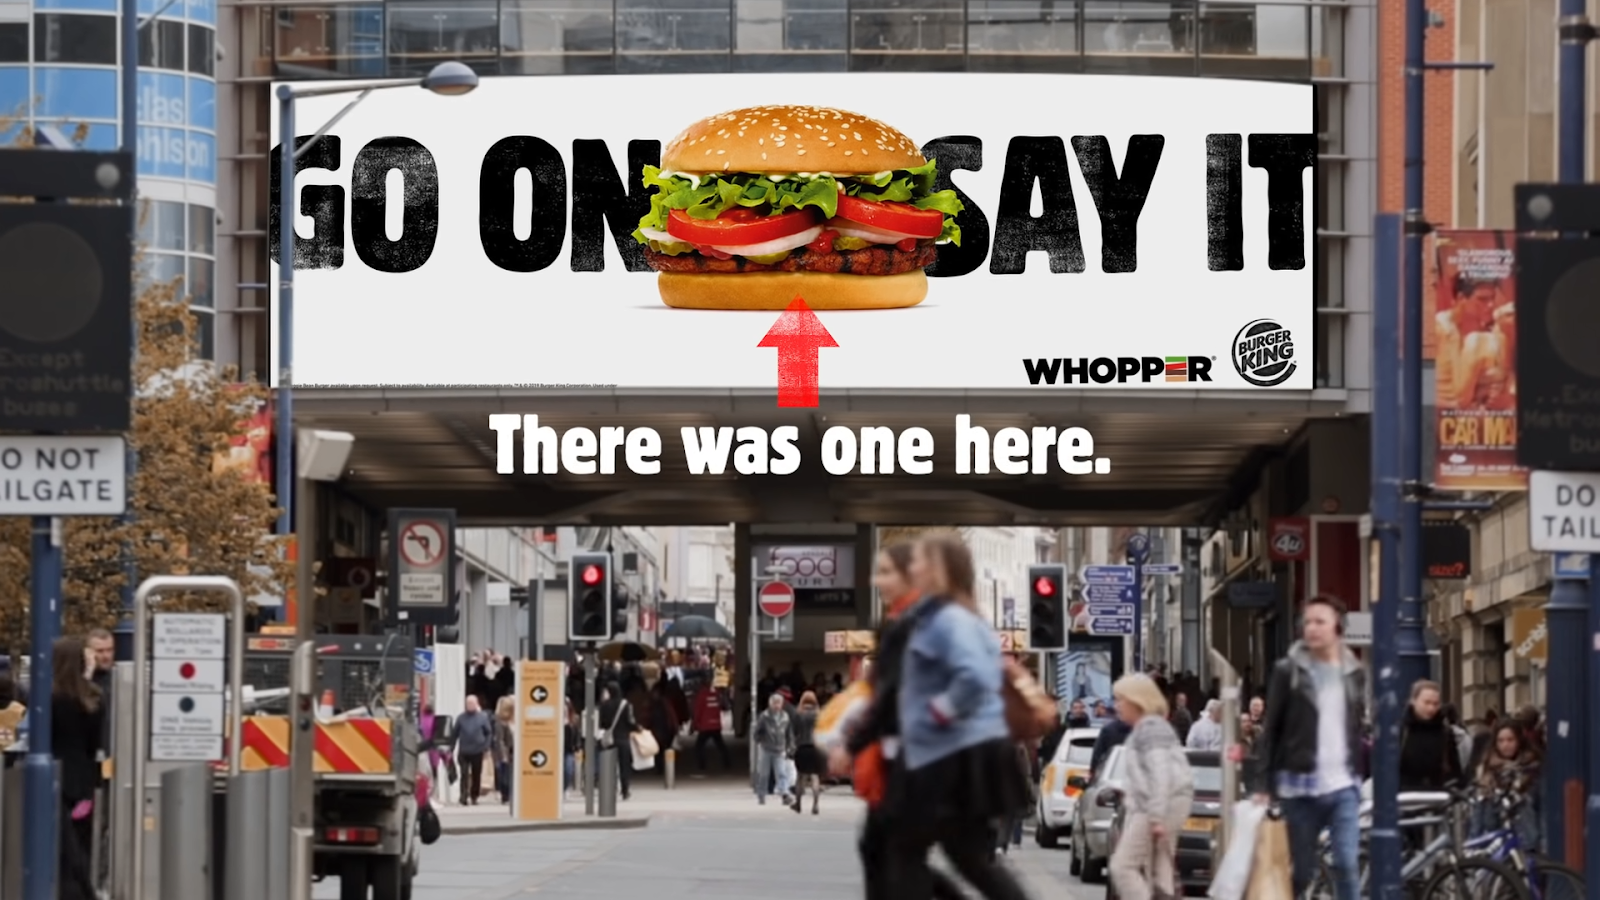 Burger King's Whopper burger ad campaign